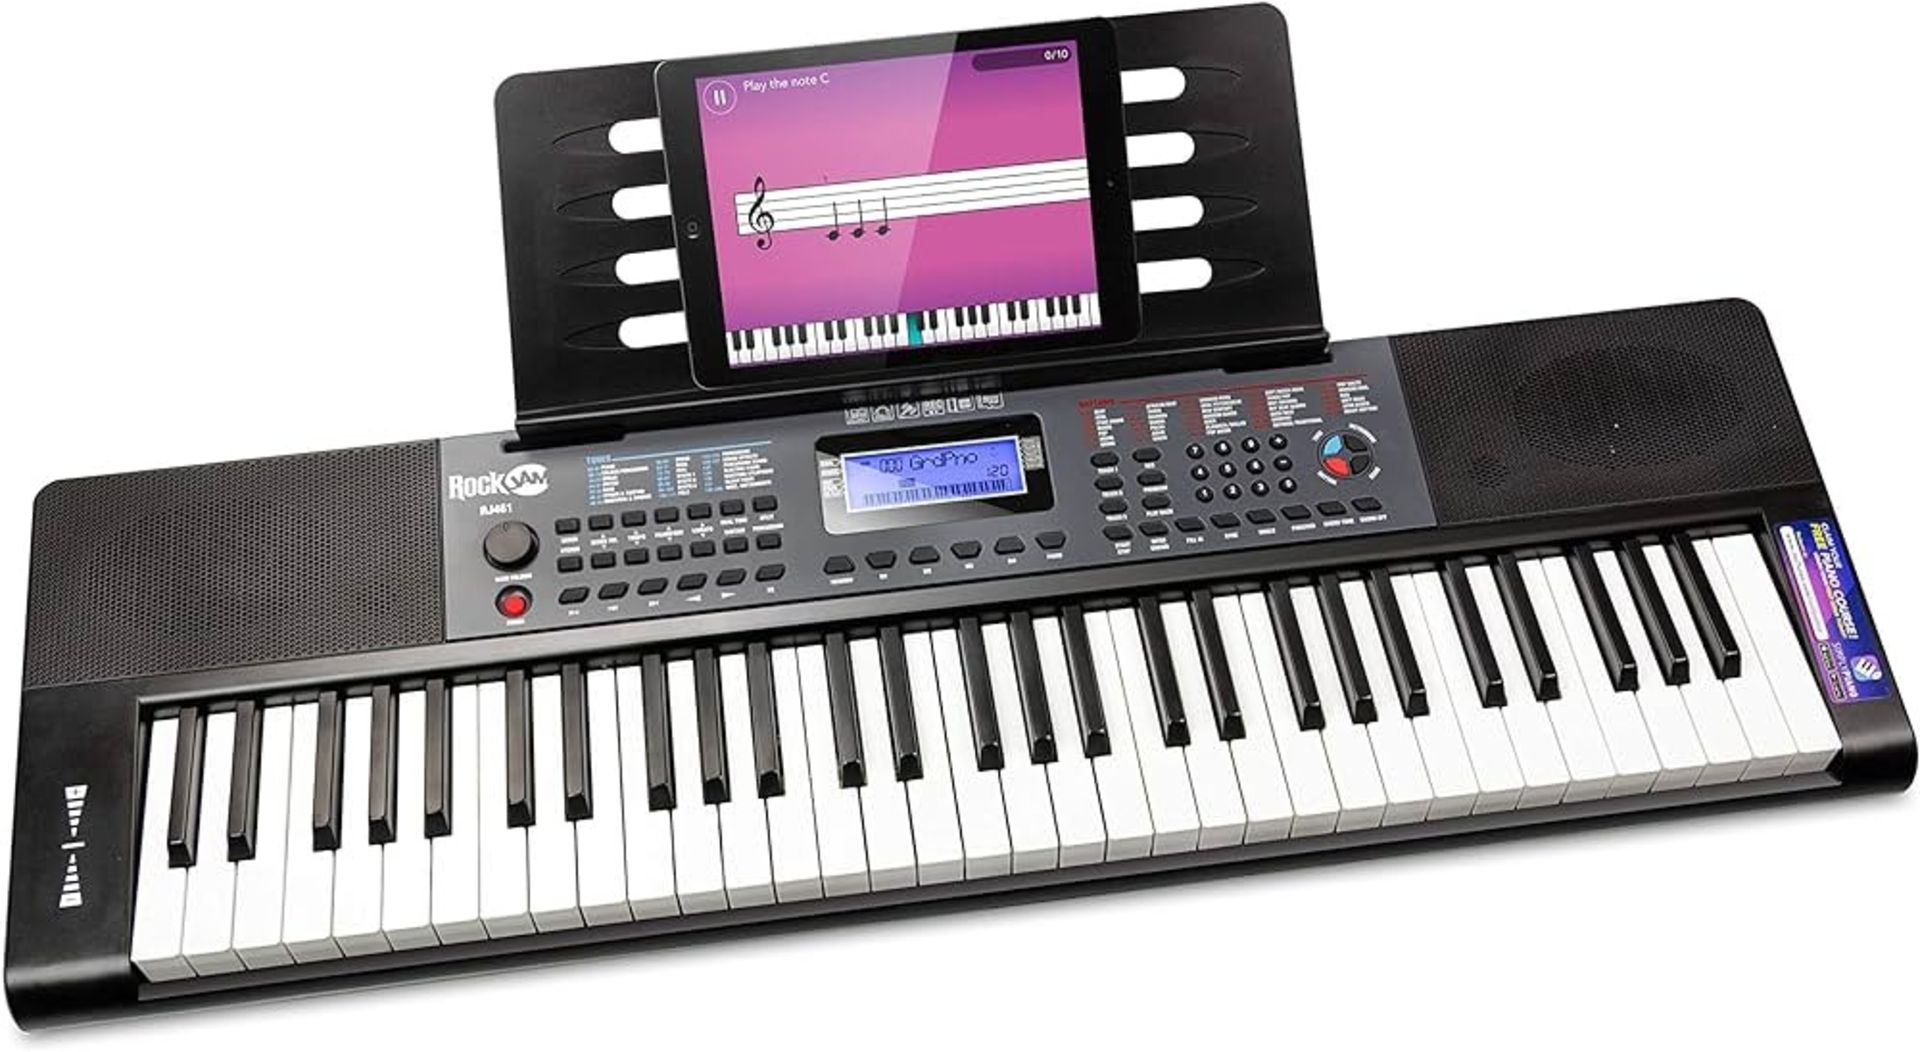 RockJam 61 Key Keyboard Piano with Pitch Bend - ER20